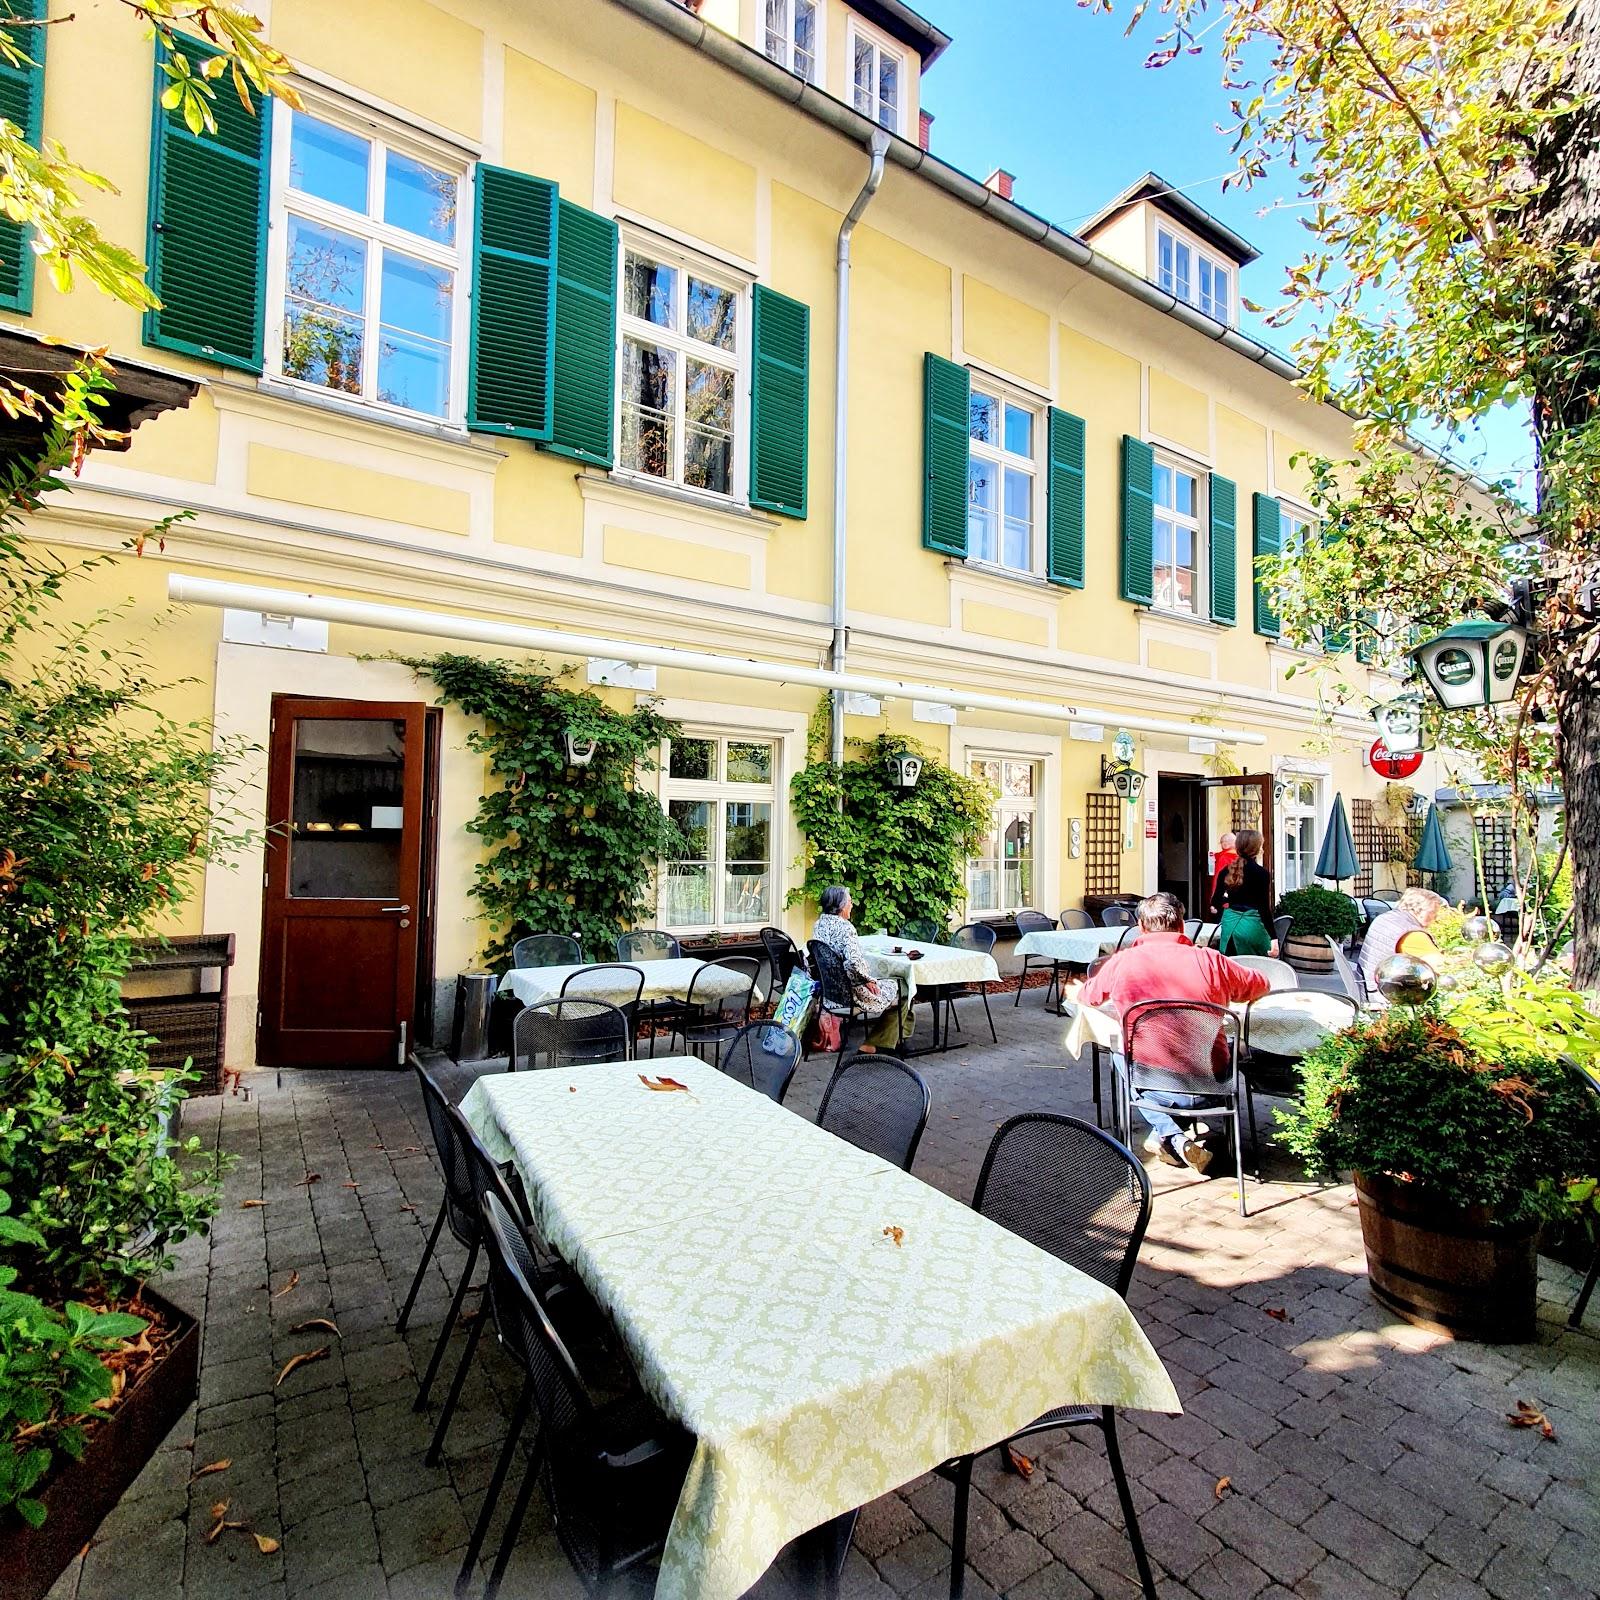 Restaurant "Restaurant Brandhof" in Graz